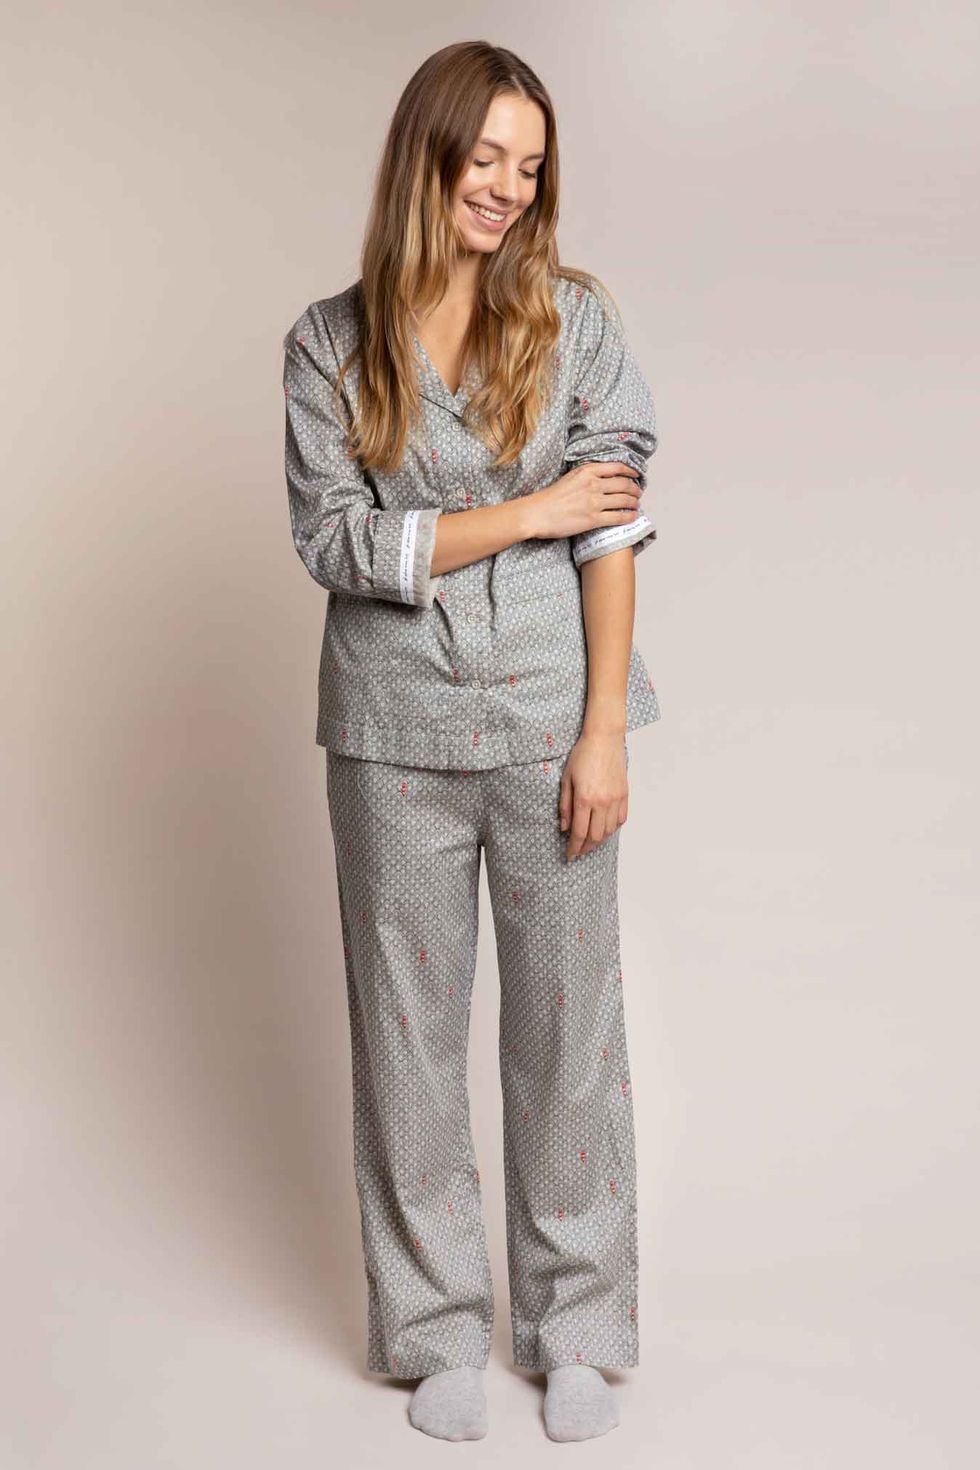 woman wearing grey pyjamas